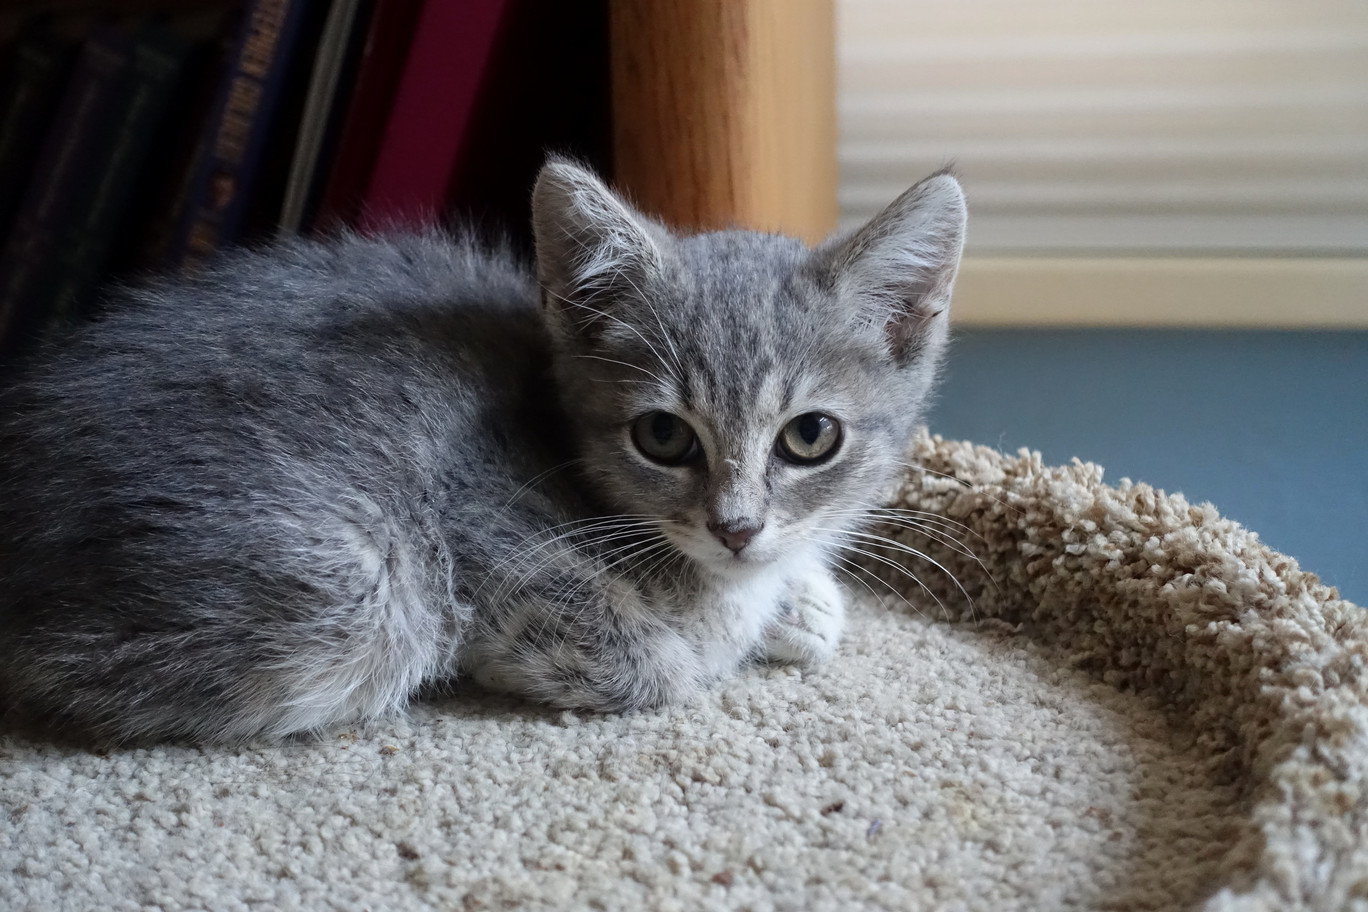 Kitten using bed instead of litterbox – help